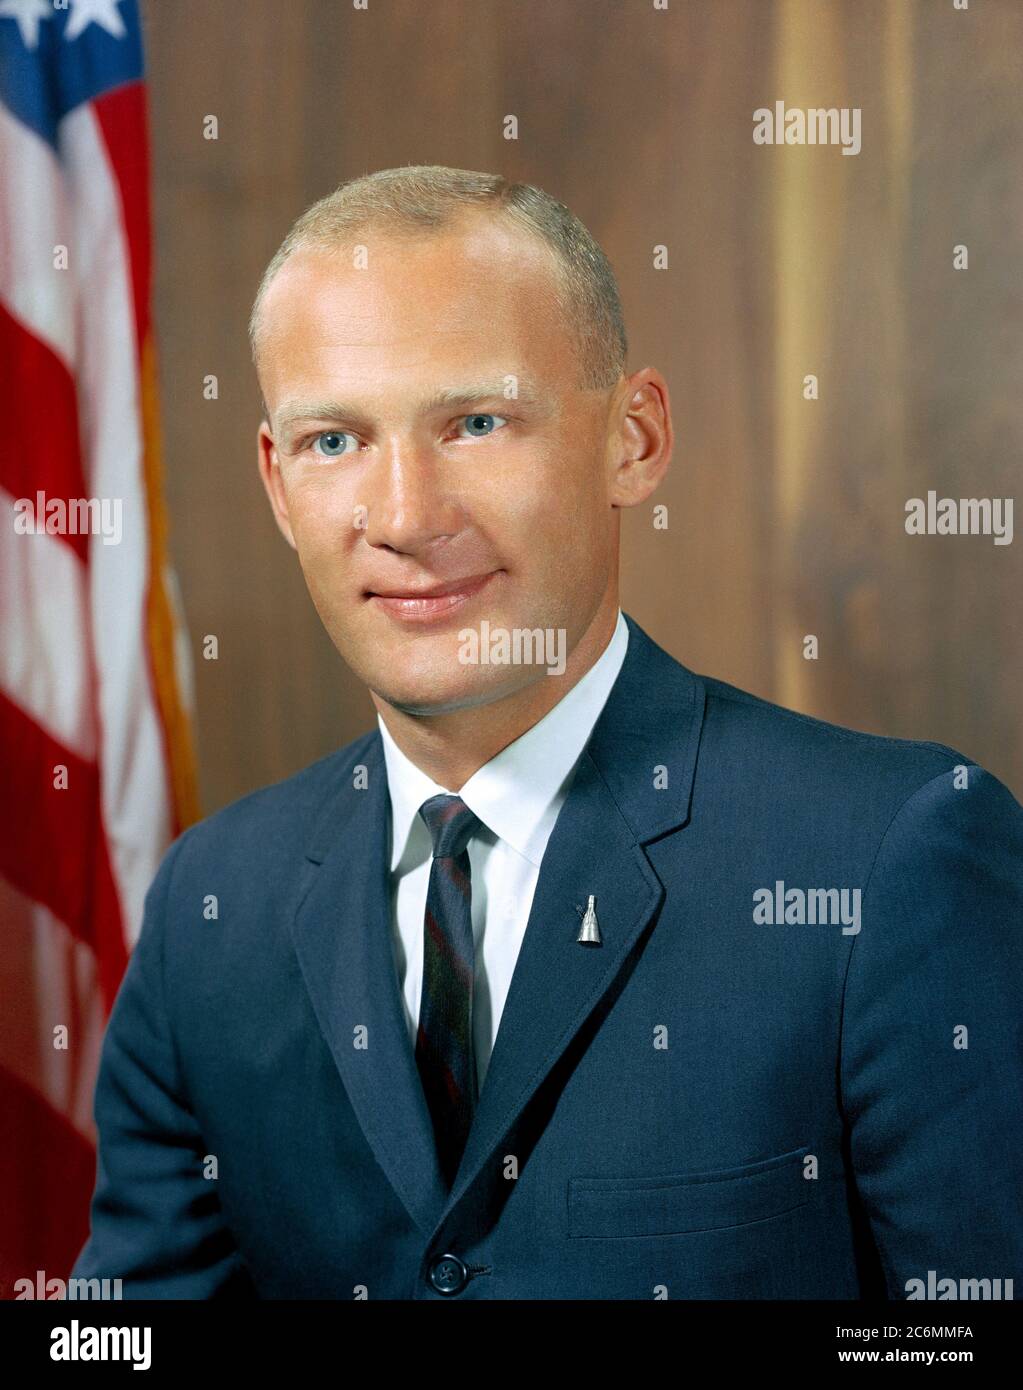 (1963) - - - Astronaut Edwin E." "Buzz" Aldrin, Jr. in ziviler Kleidung. Stockfoto